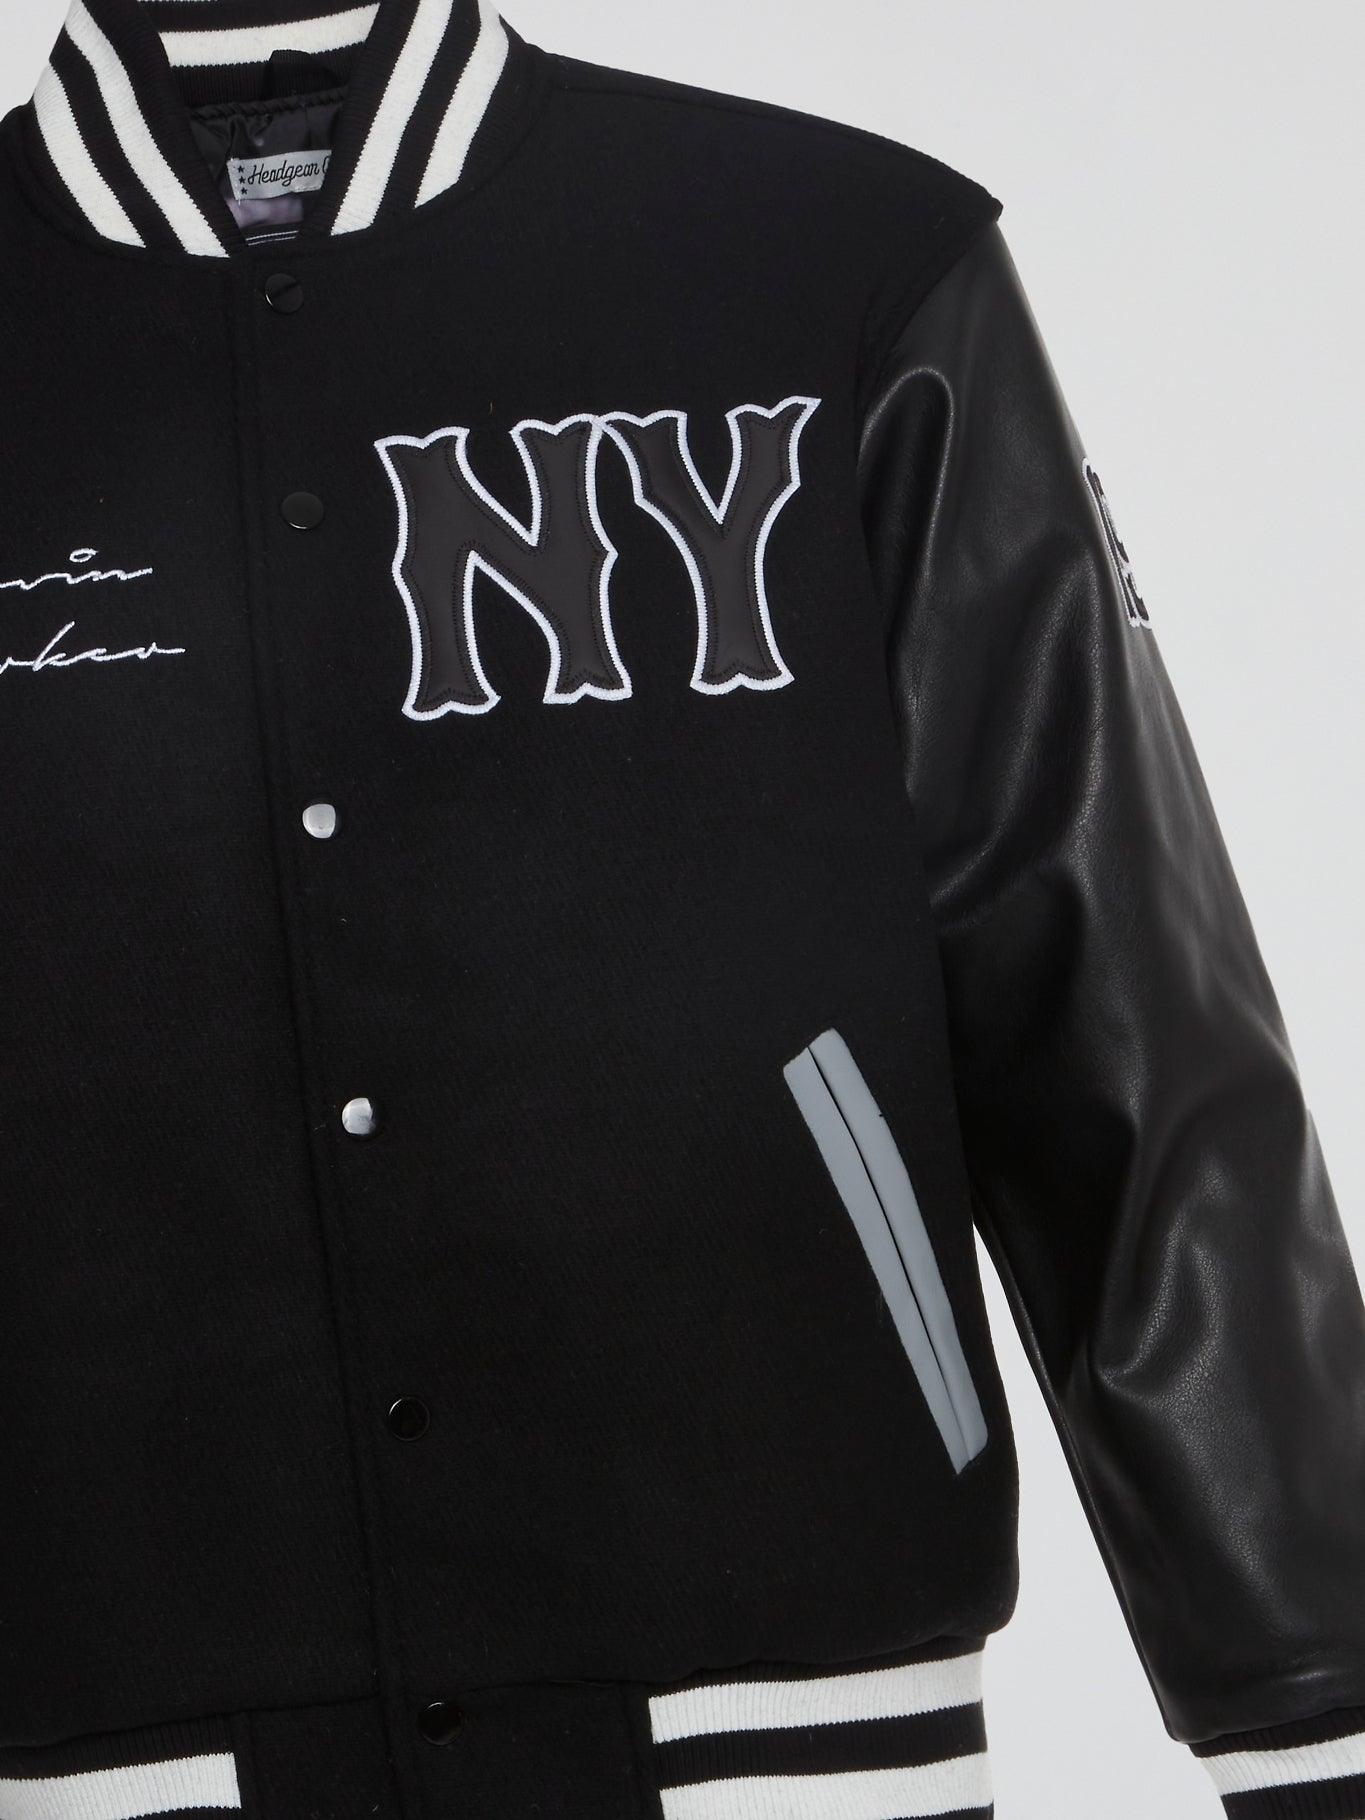 New York Black Yankees Black Varsity Jacket - B-Hype Society